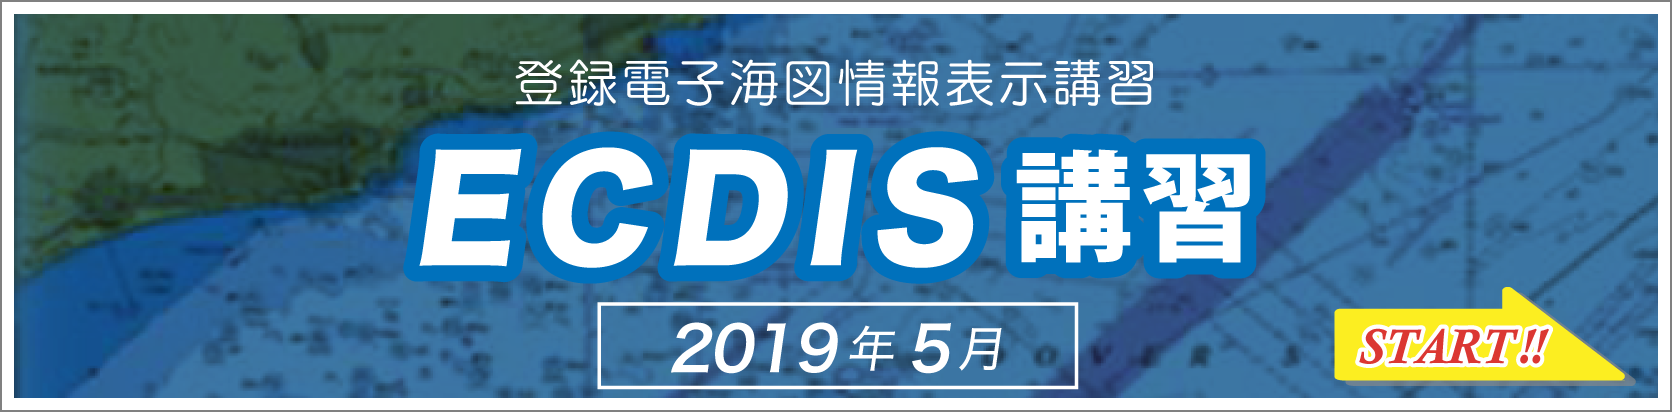 ECDIS講習 2019年5月開講